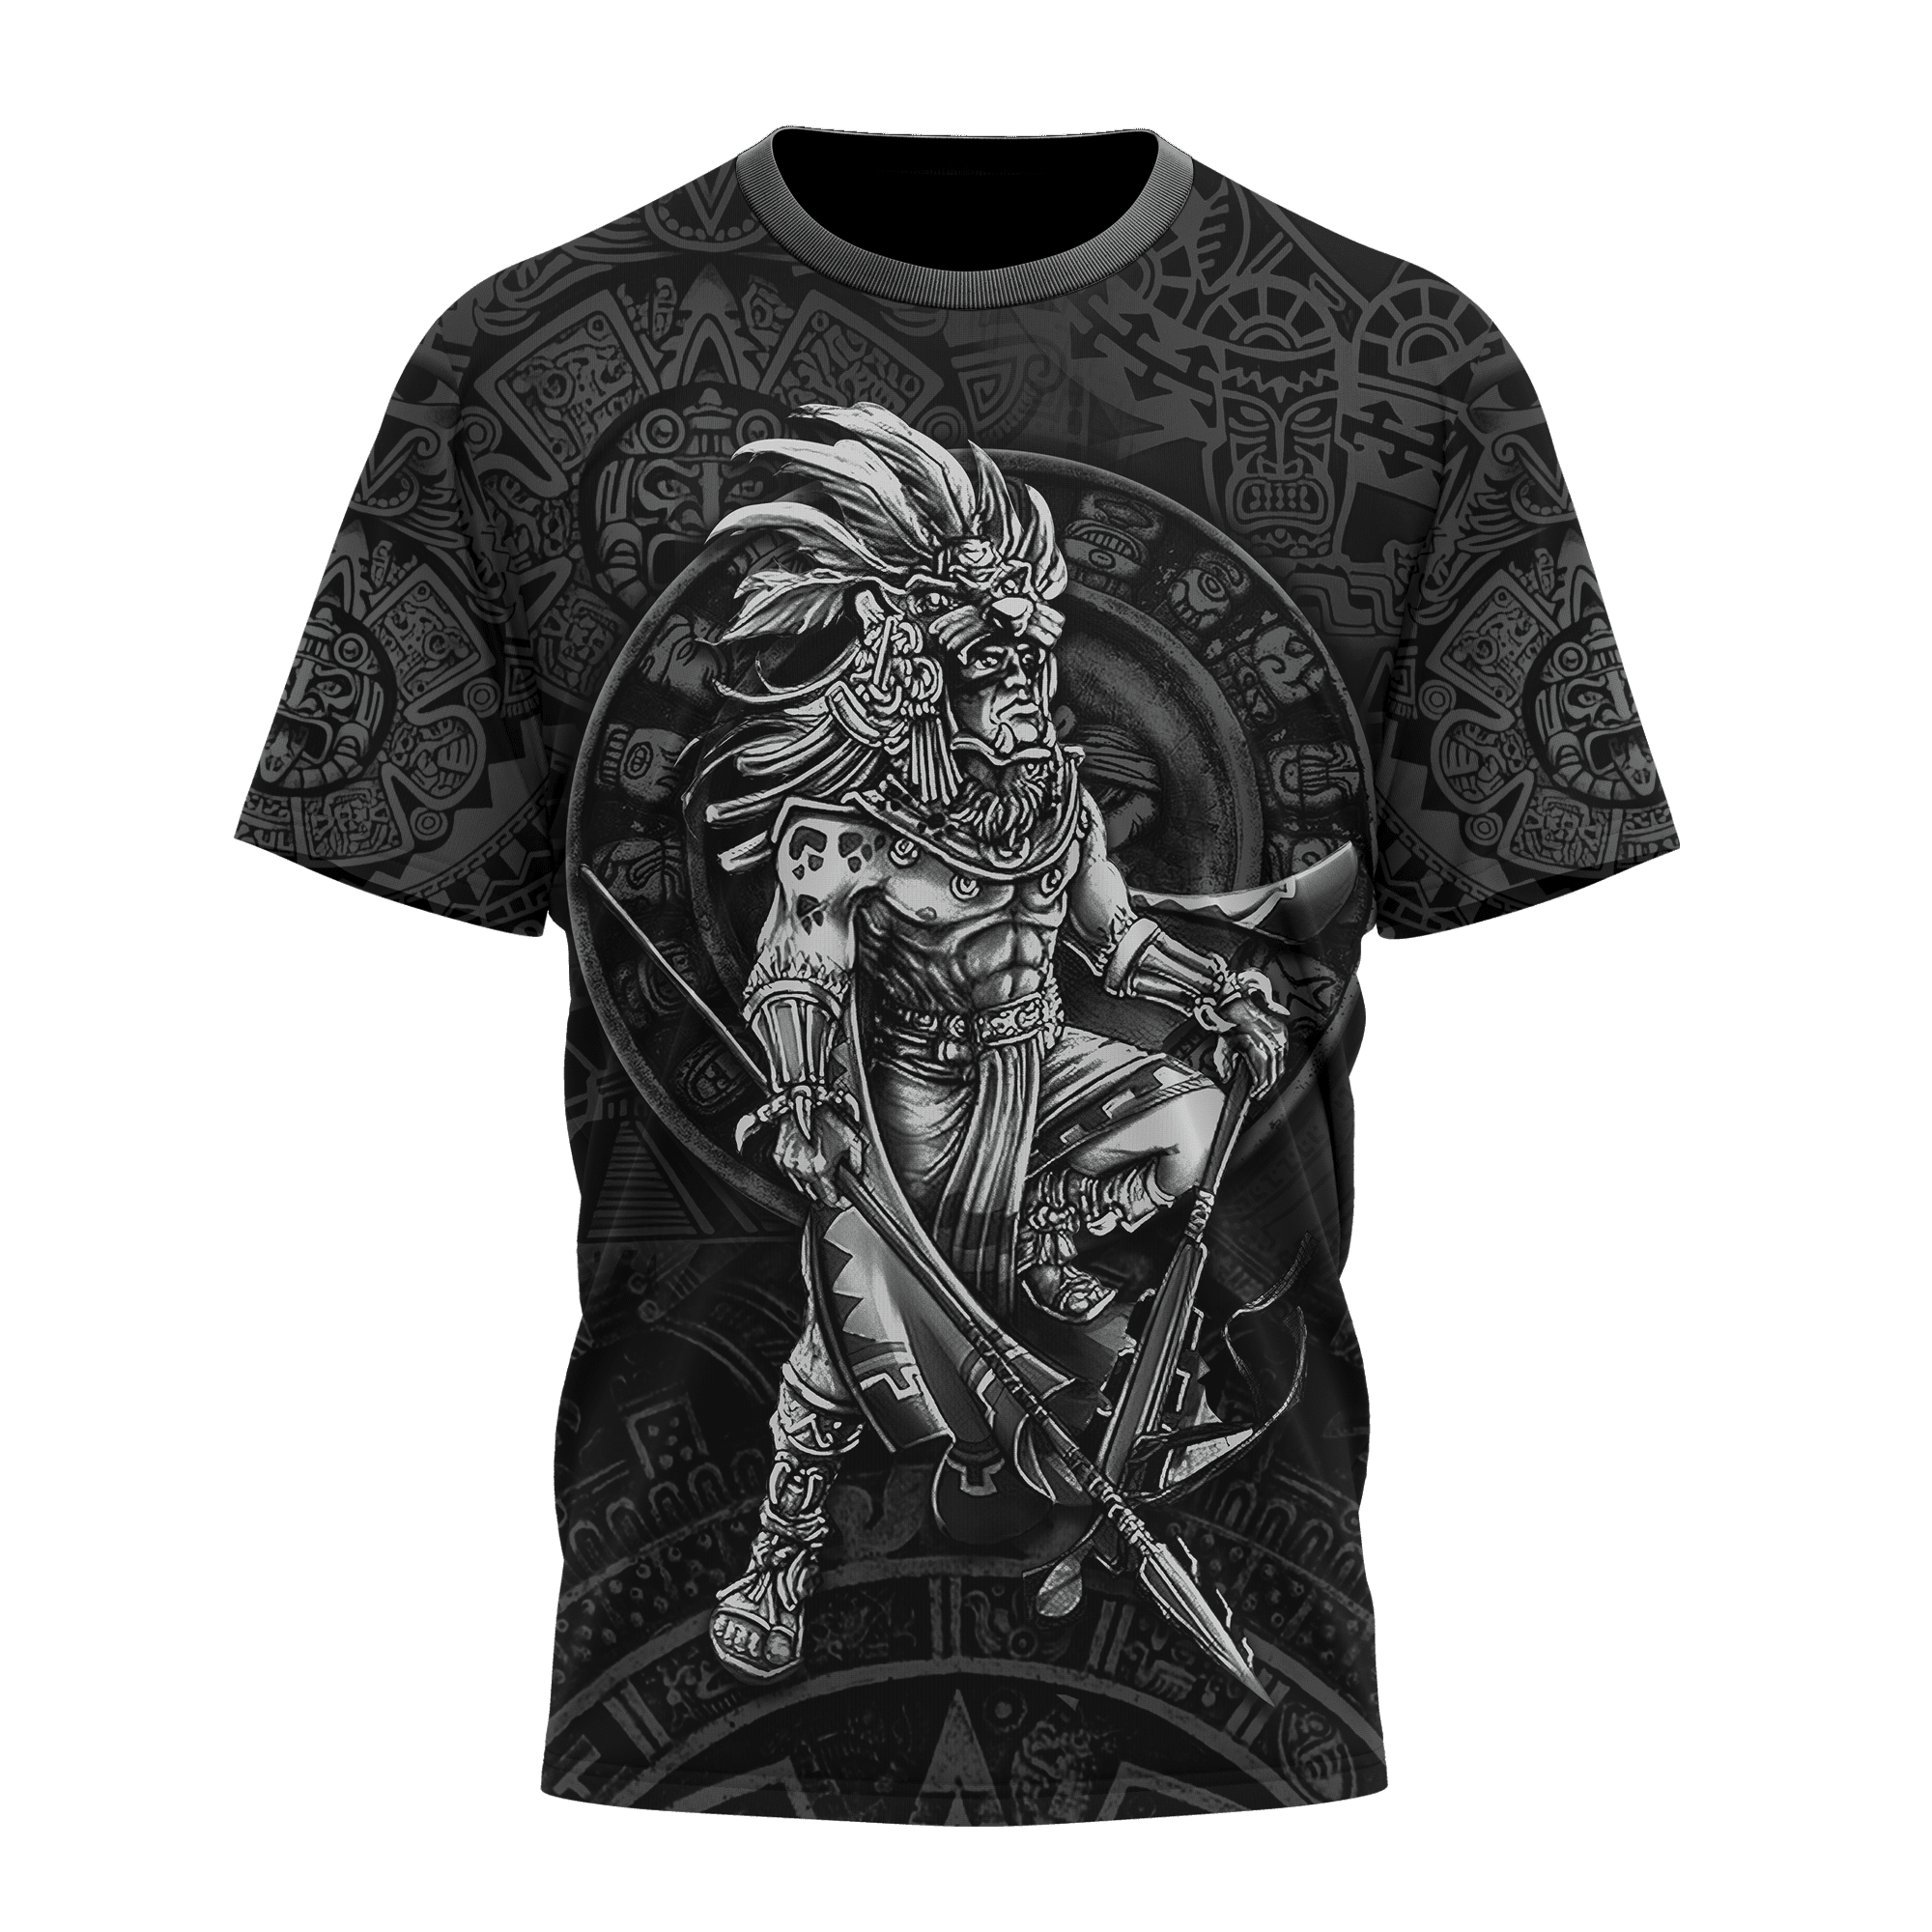 3D All Over Print Aztec Warrior Mexican T-Shirt/ Mexican Pride Shirt